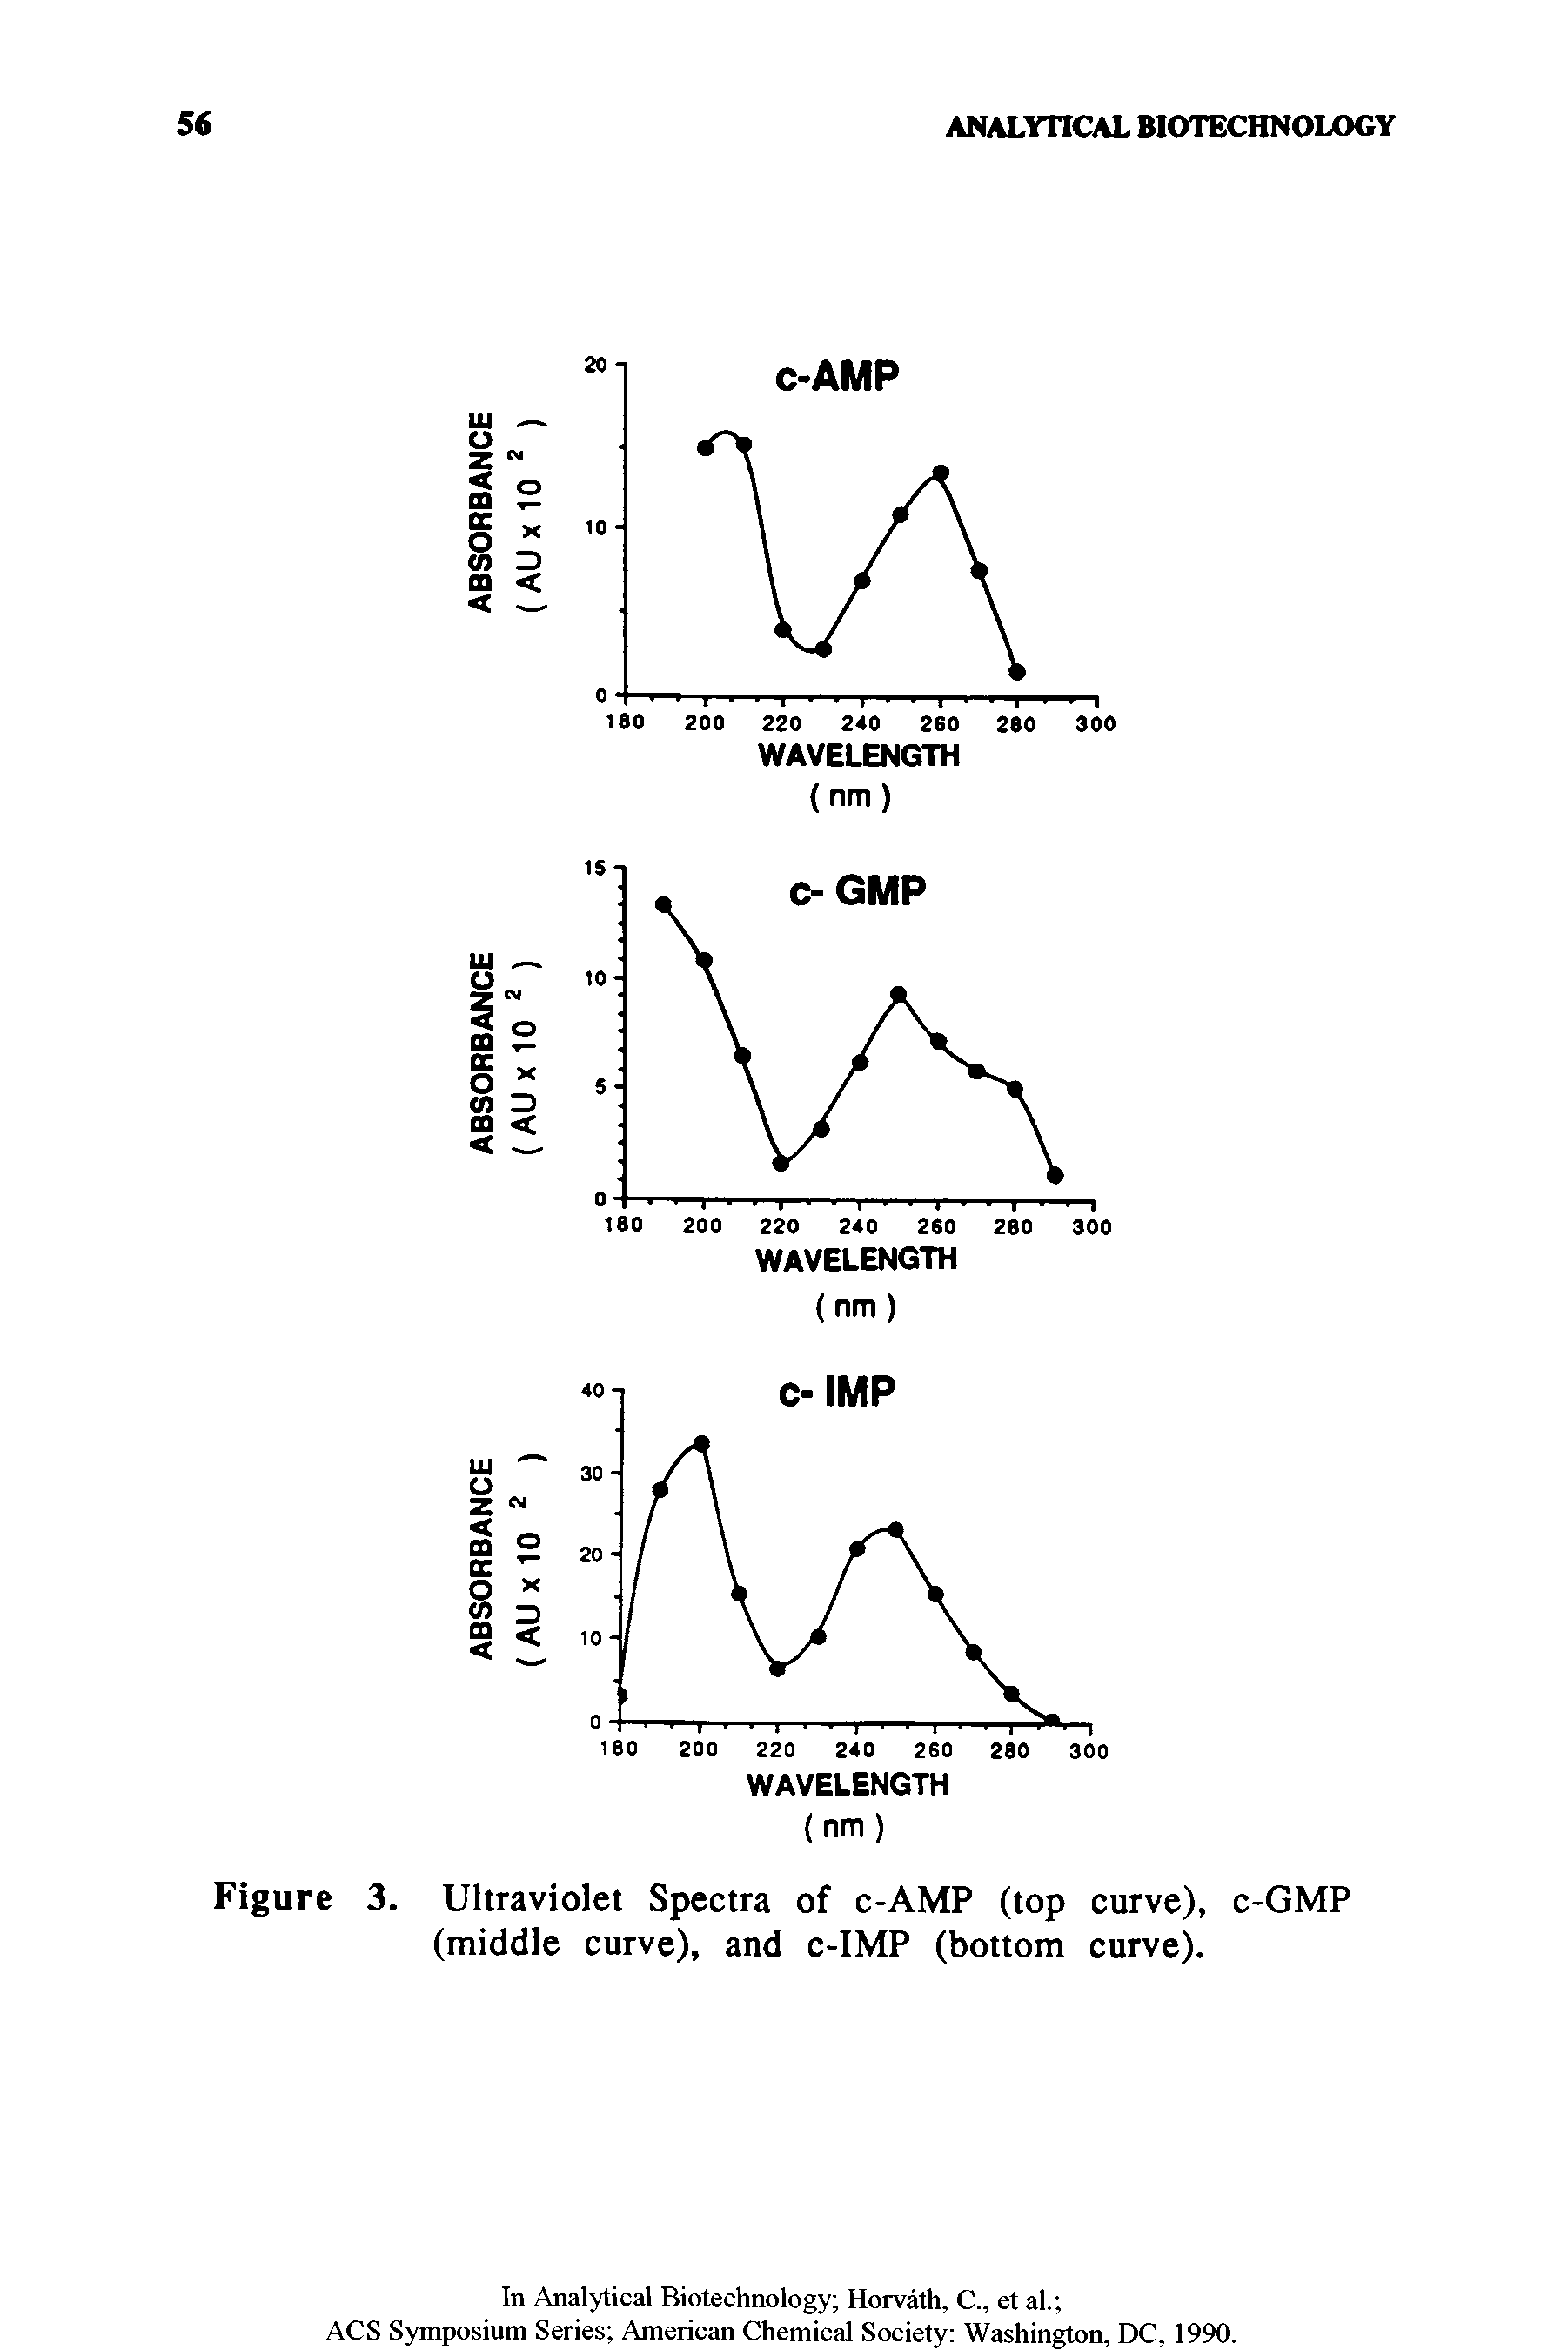 Figure 3. Ultraviolet Spectra of c-AMP (top curve), c-GMP (middle curve), and c-IMP (bottom curve).